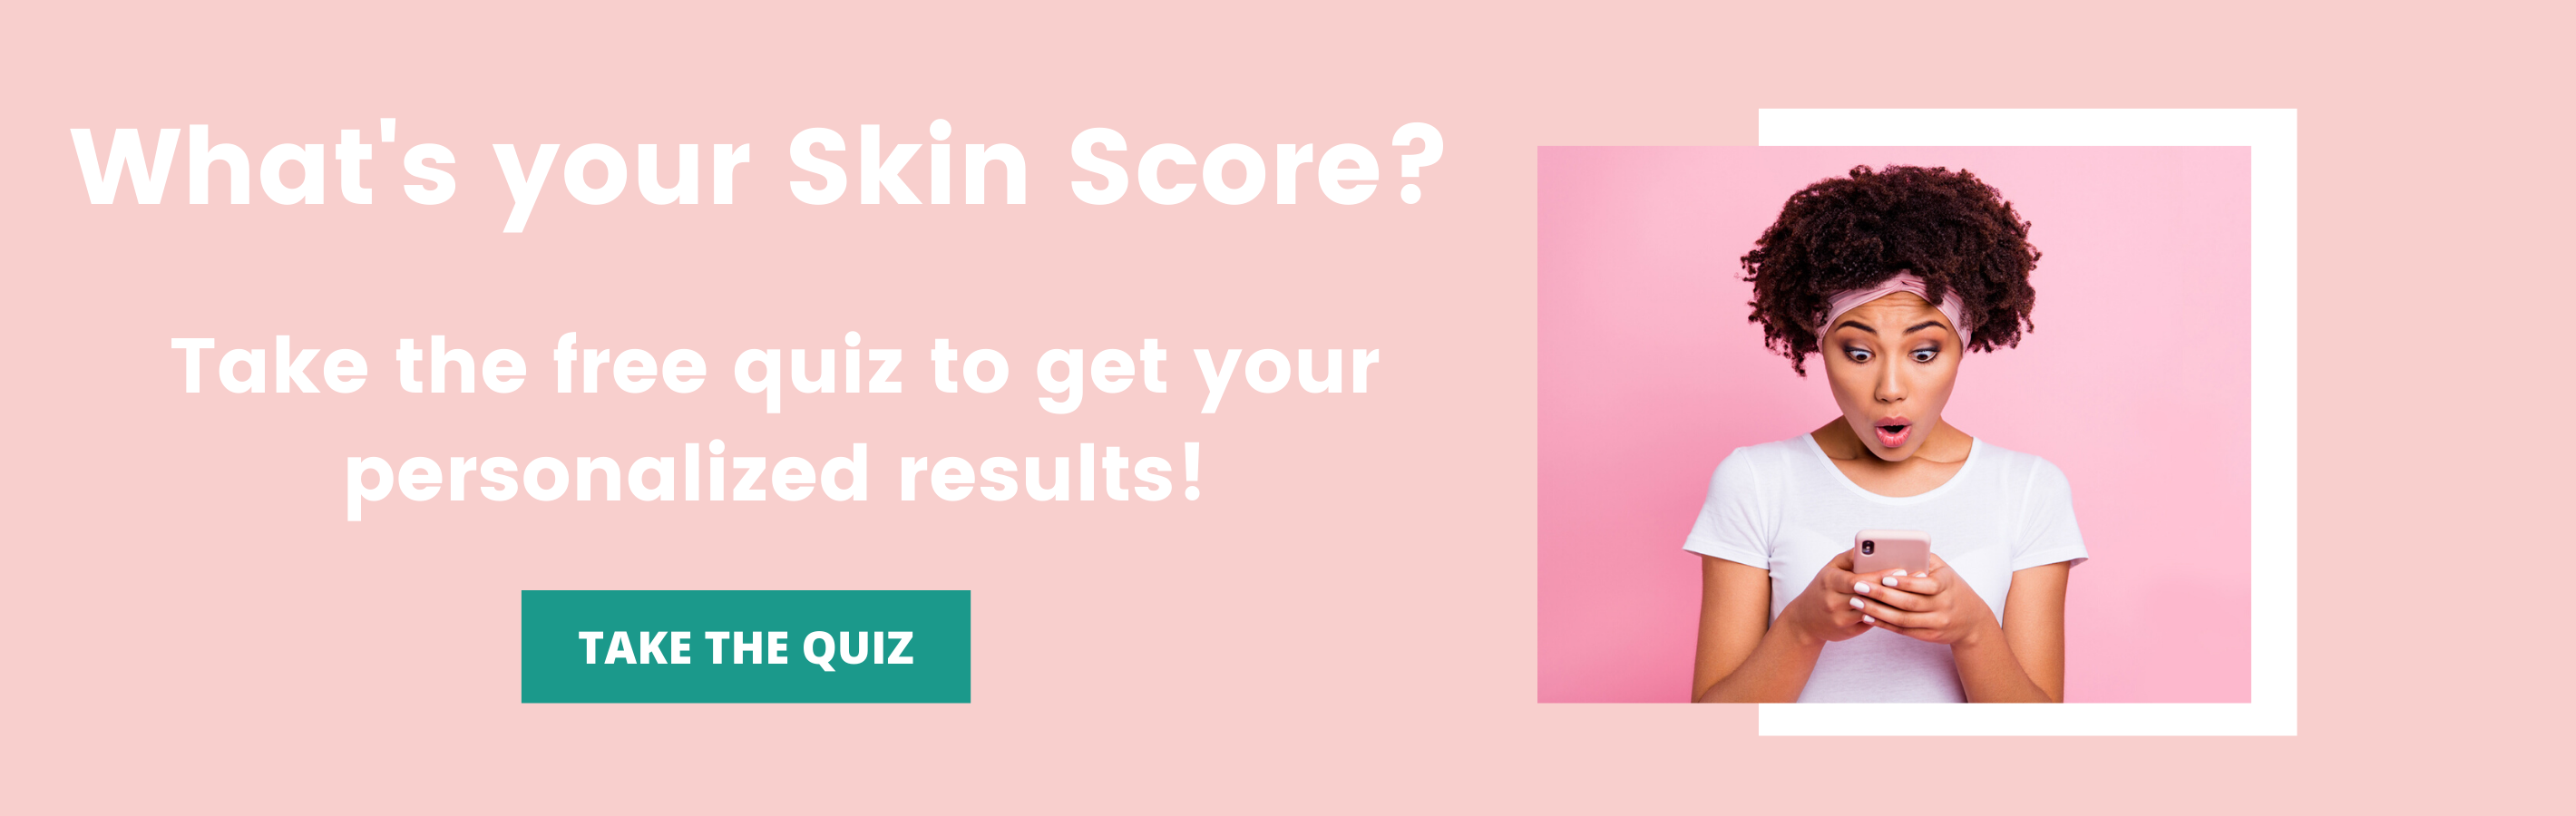 Skin Score Quiz